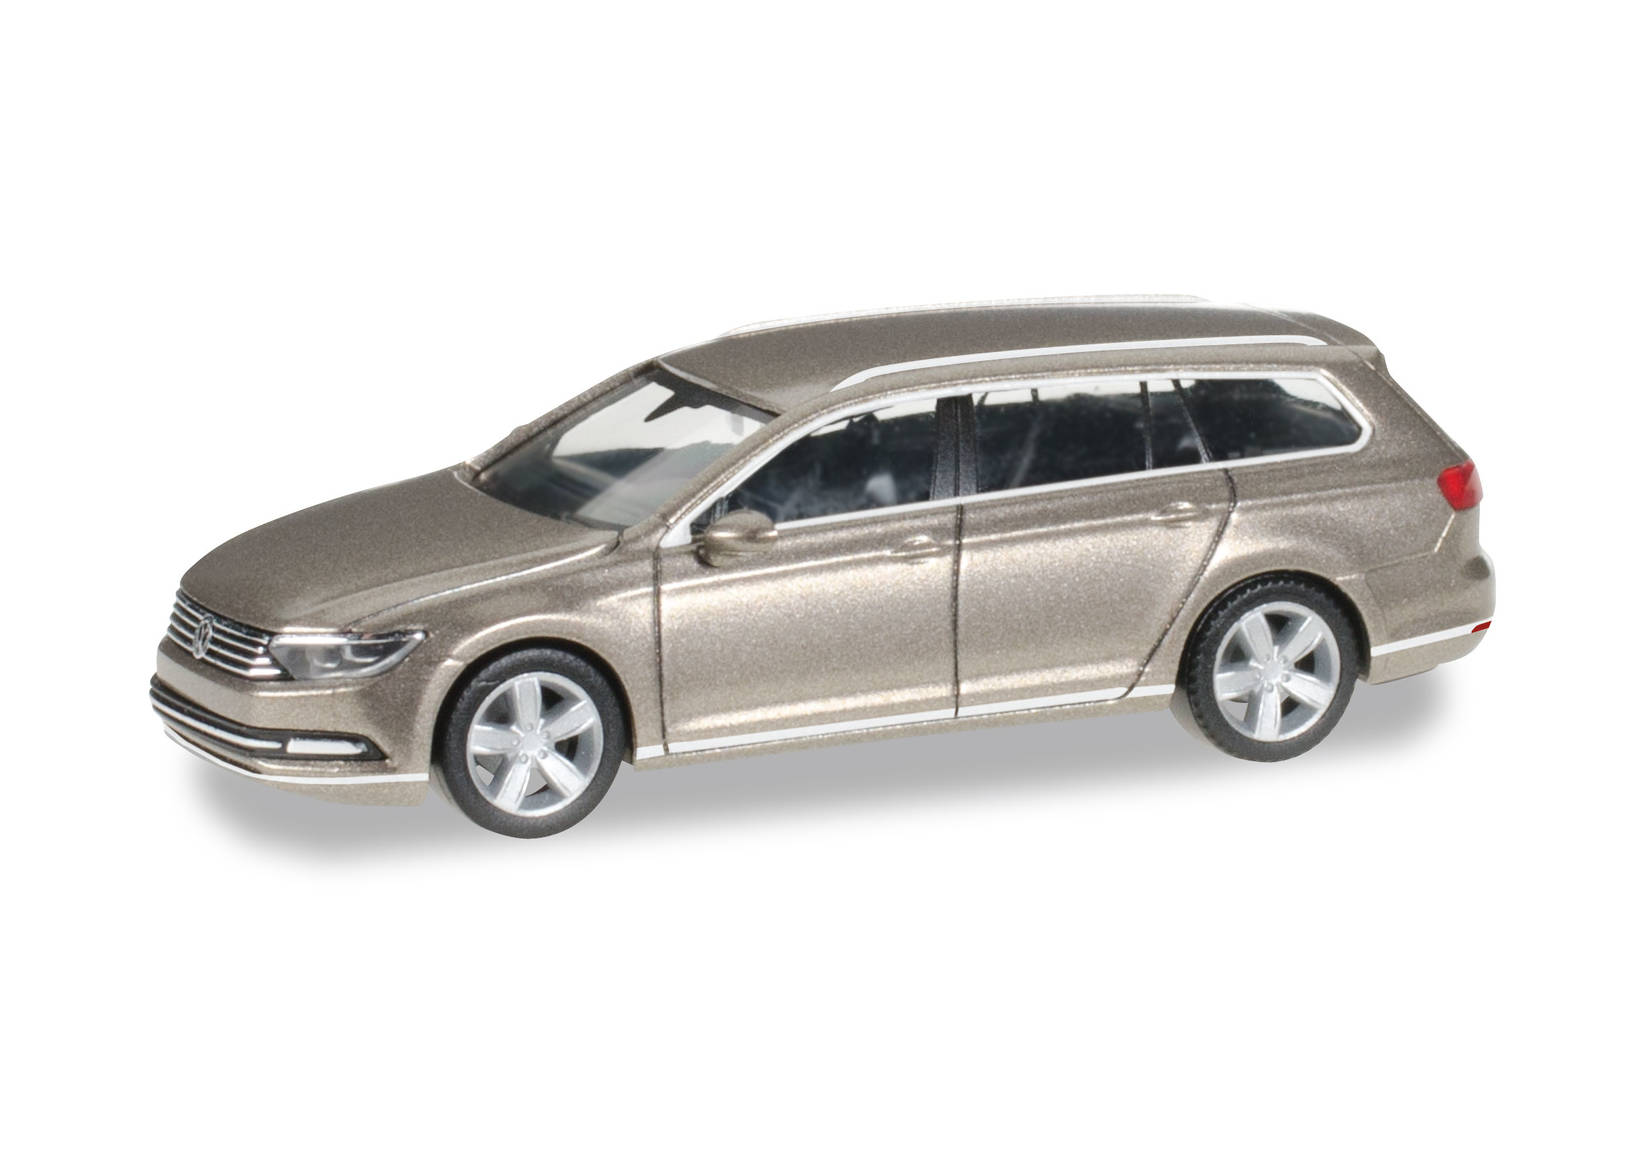 VW Passat Variant, sand gold metallic